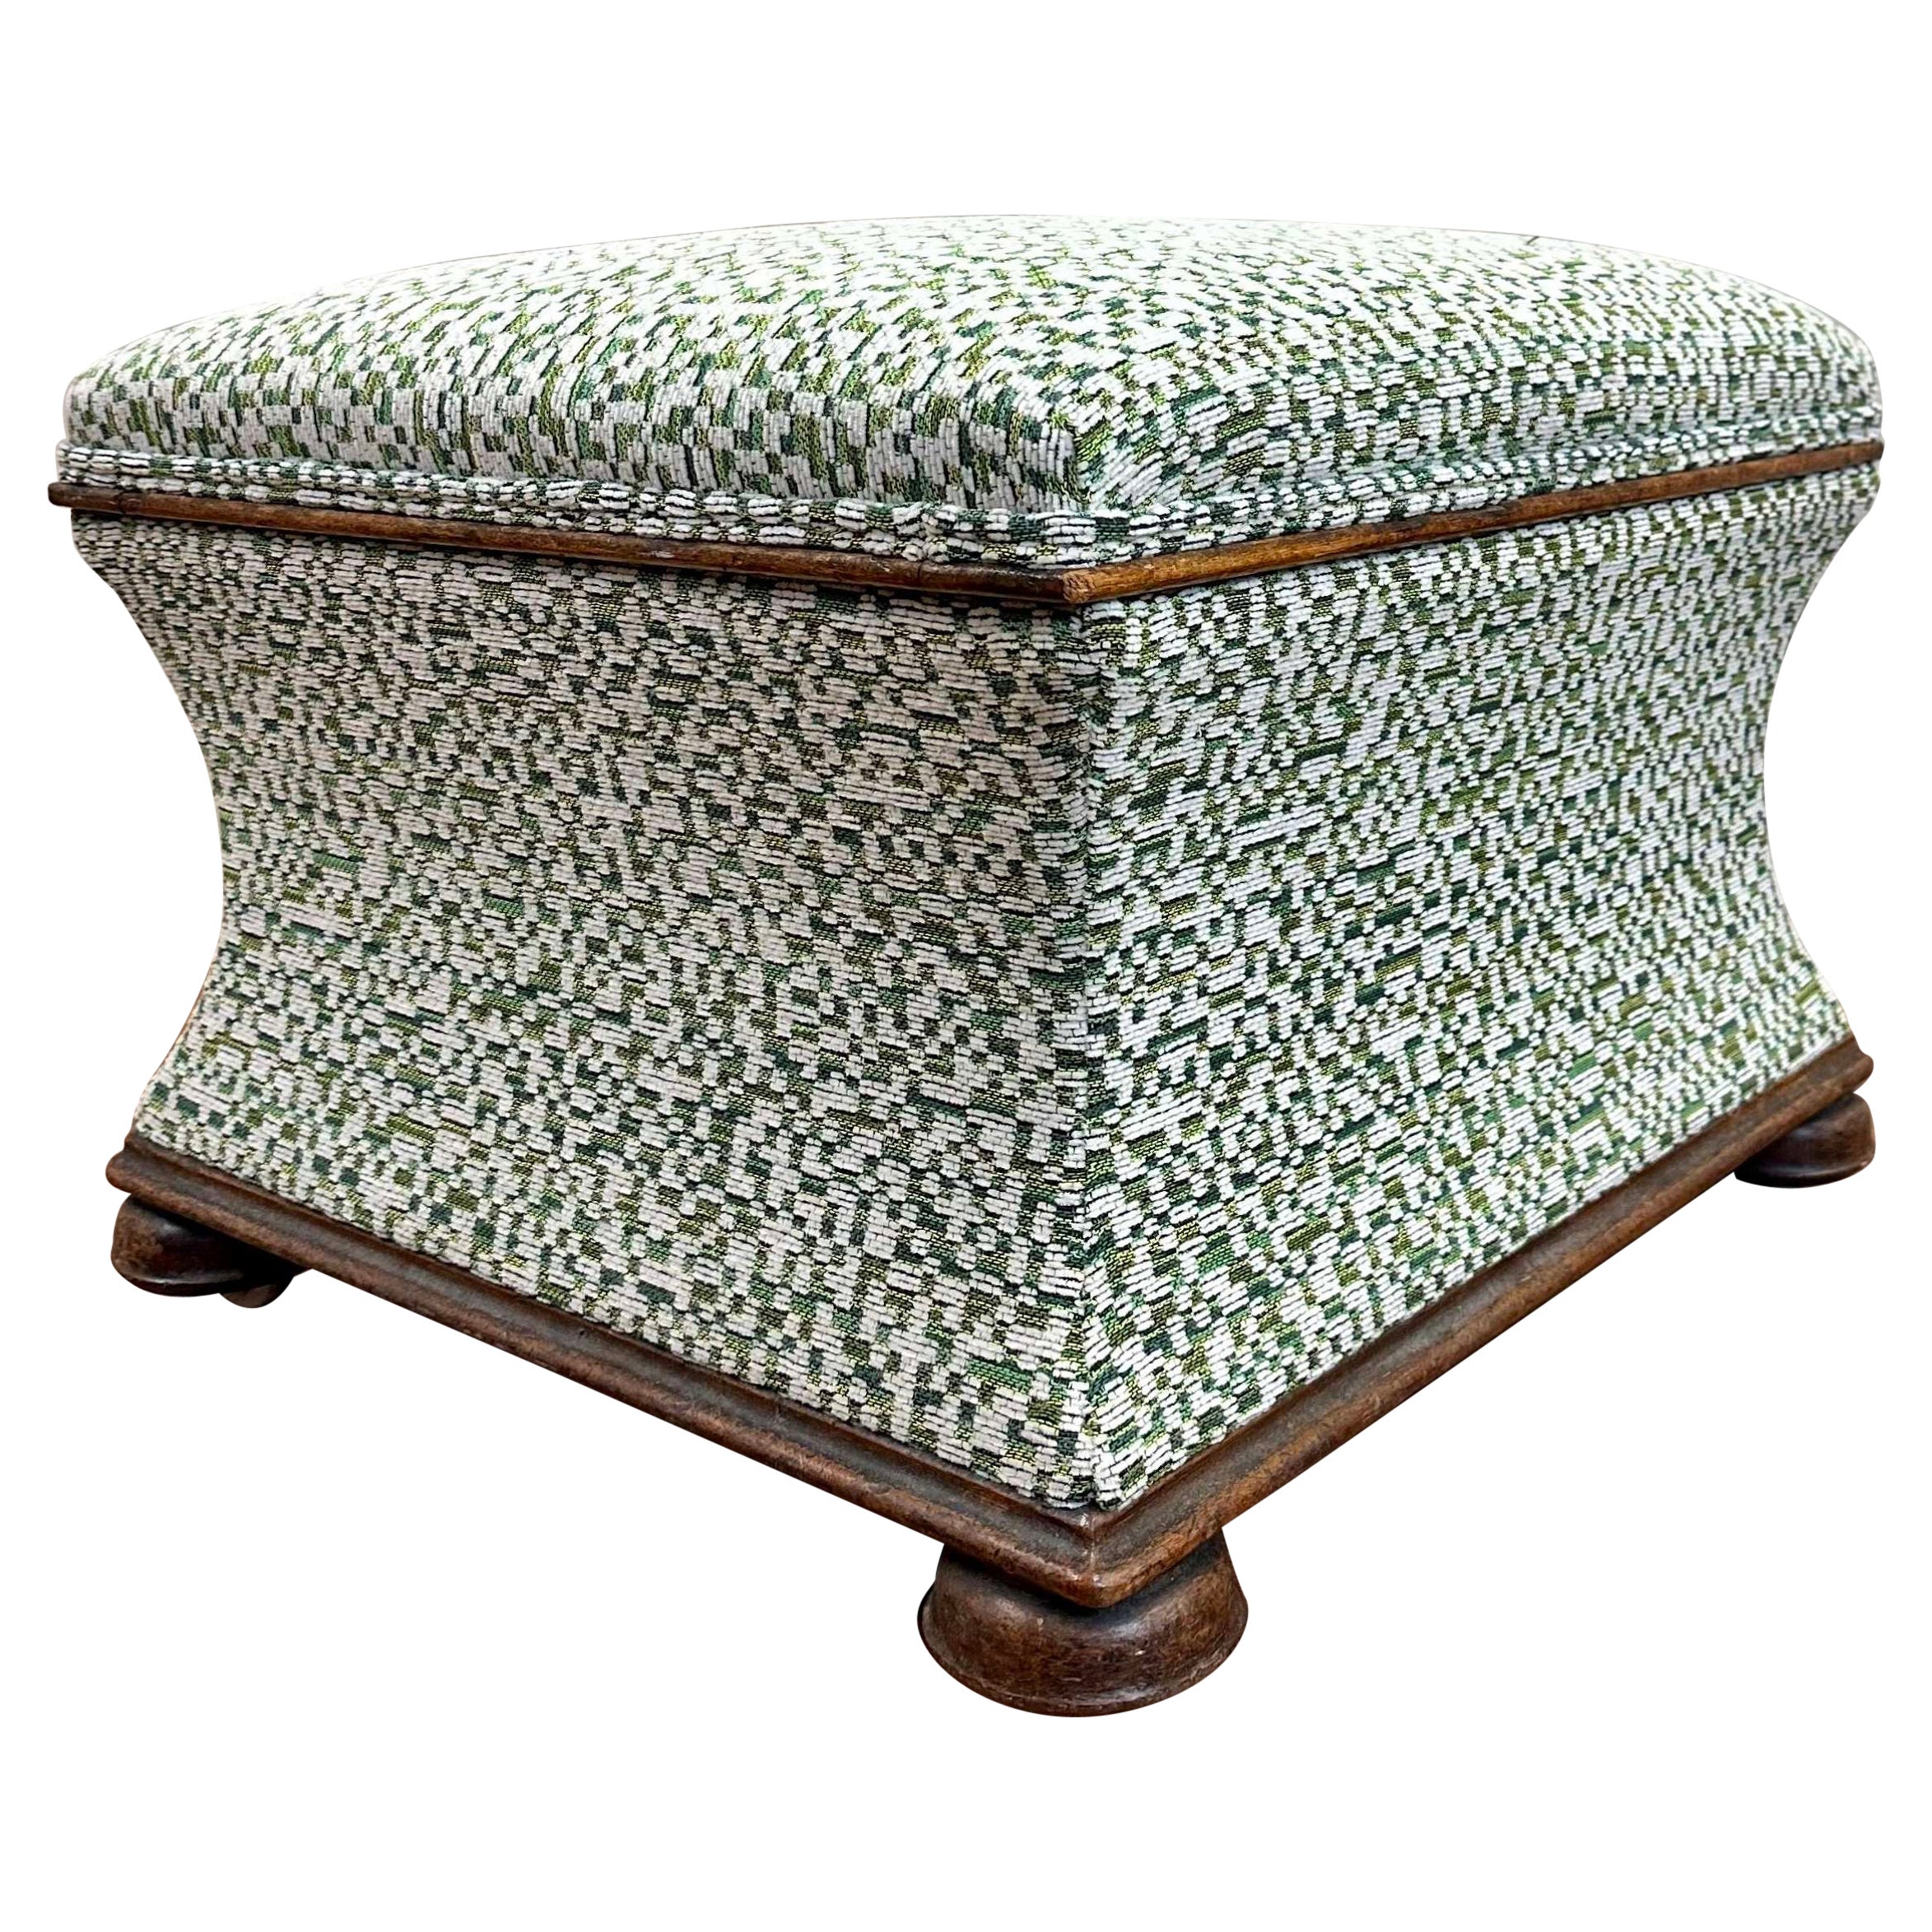 19th Century English upholstered Ottoman Footstool